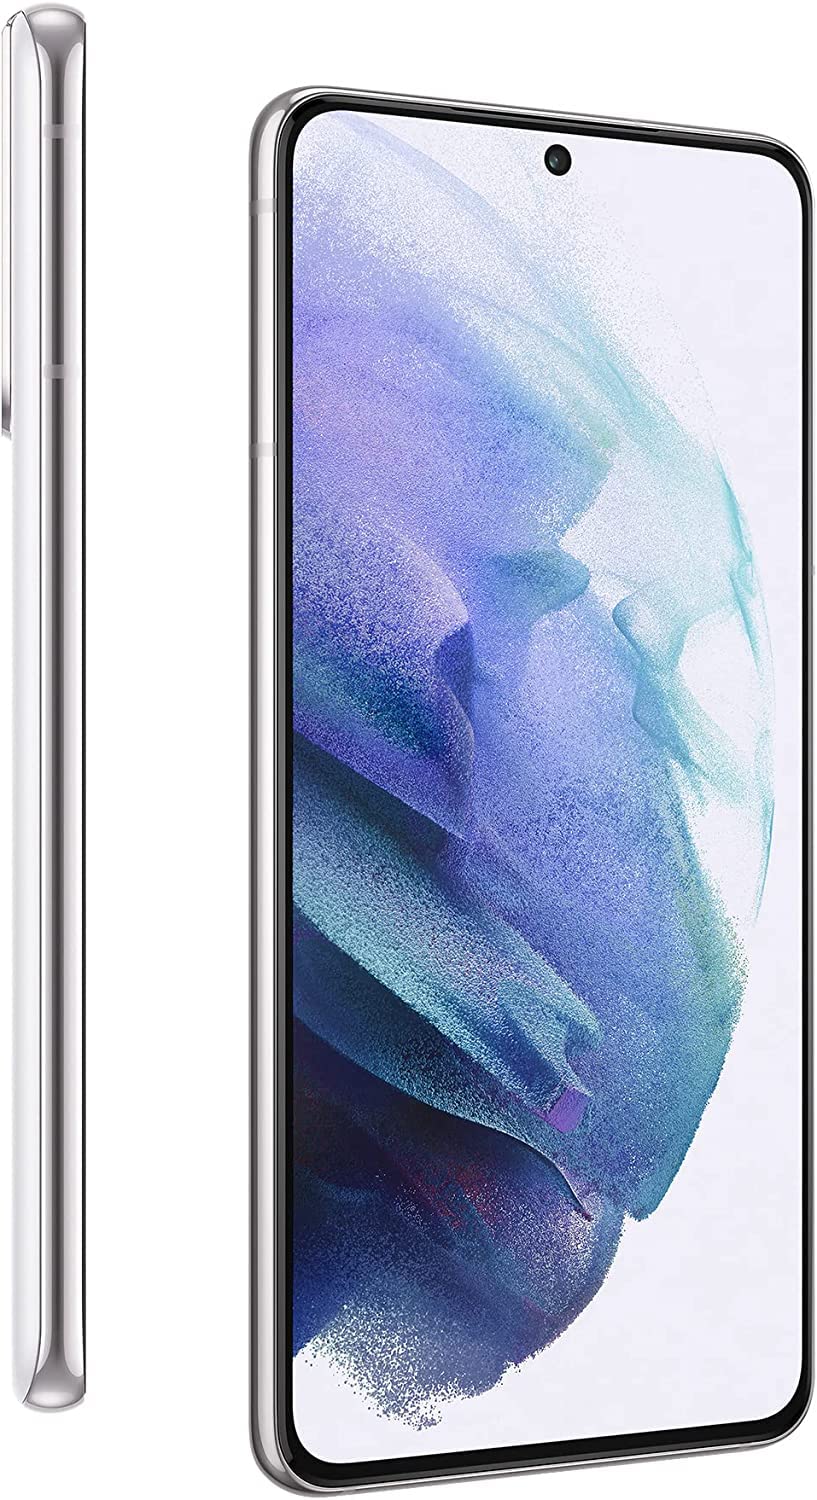 Samsung Galaxy S21 5G Smartphone SIM Free Android Mobile Phone Phantom White 128GB (UK Version)